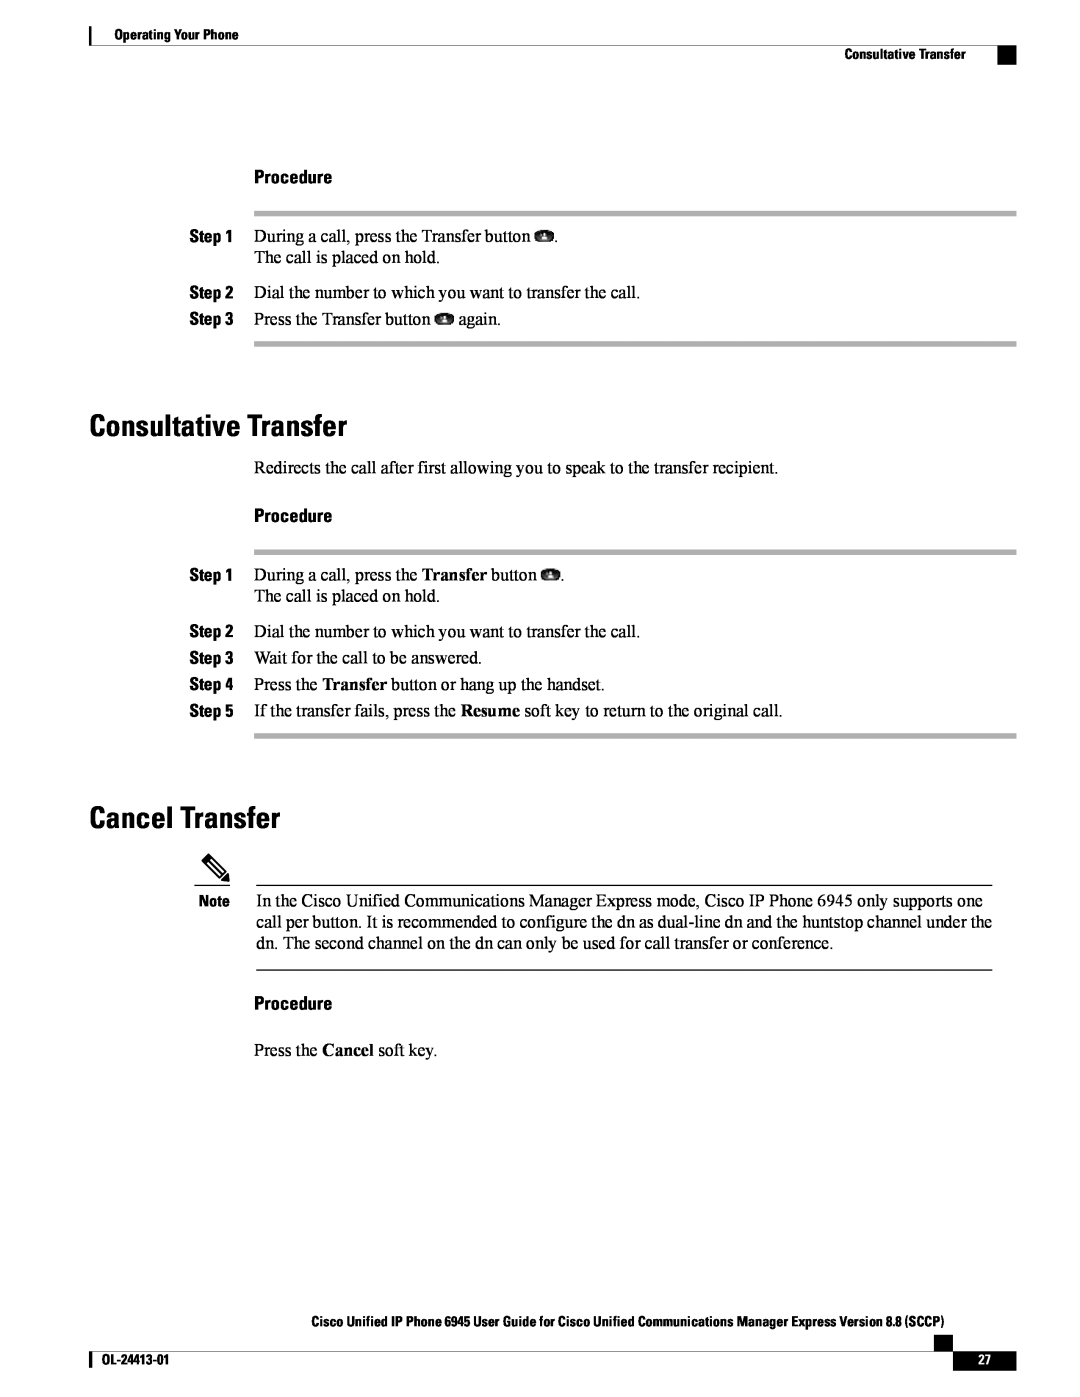 Cisco Systems 6945 manual Consultative Transfer, Cancel Transfer, Procedure 